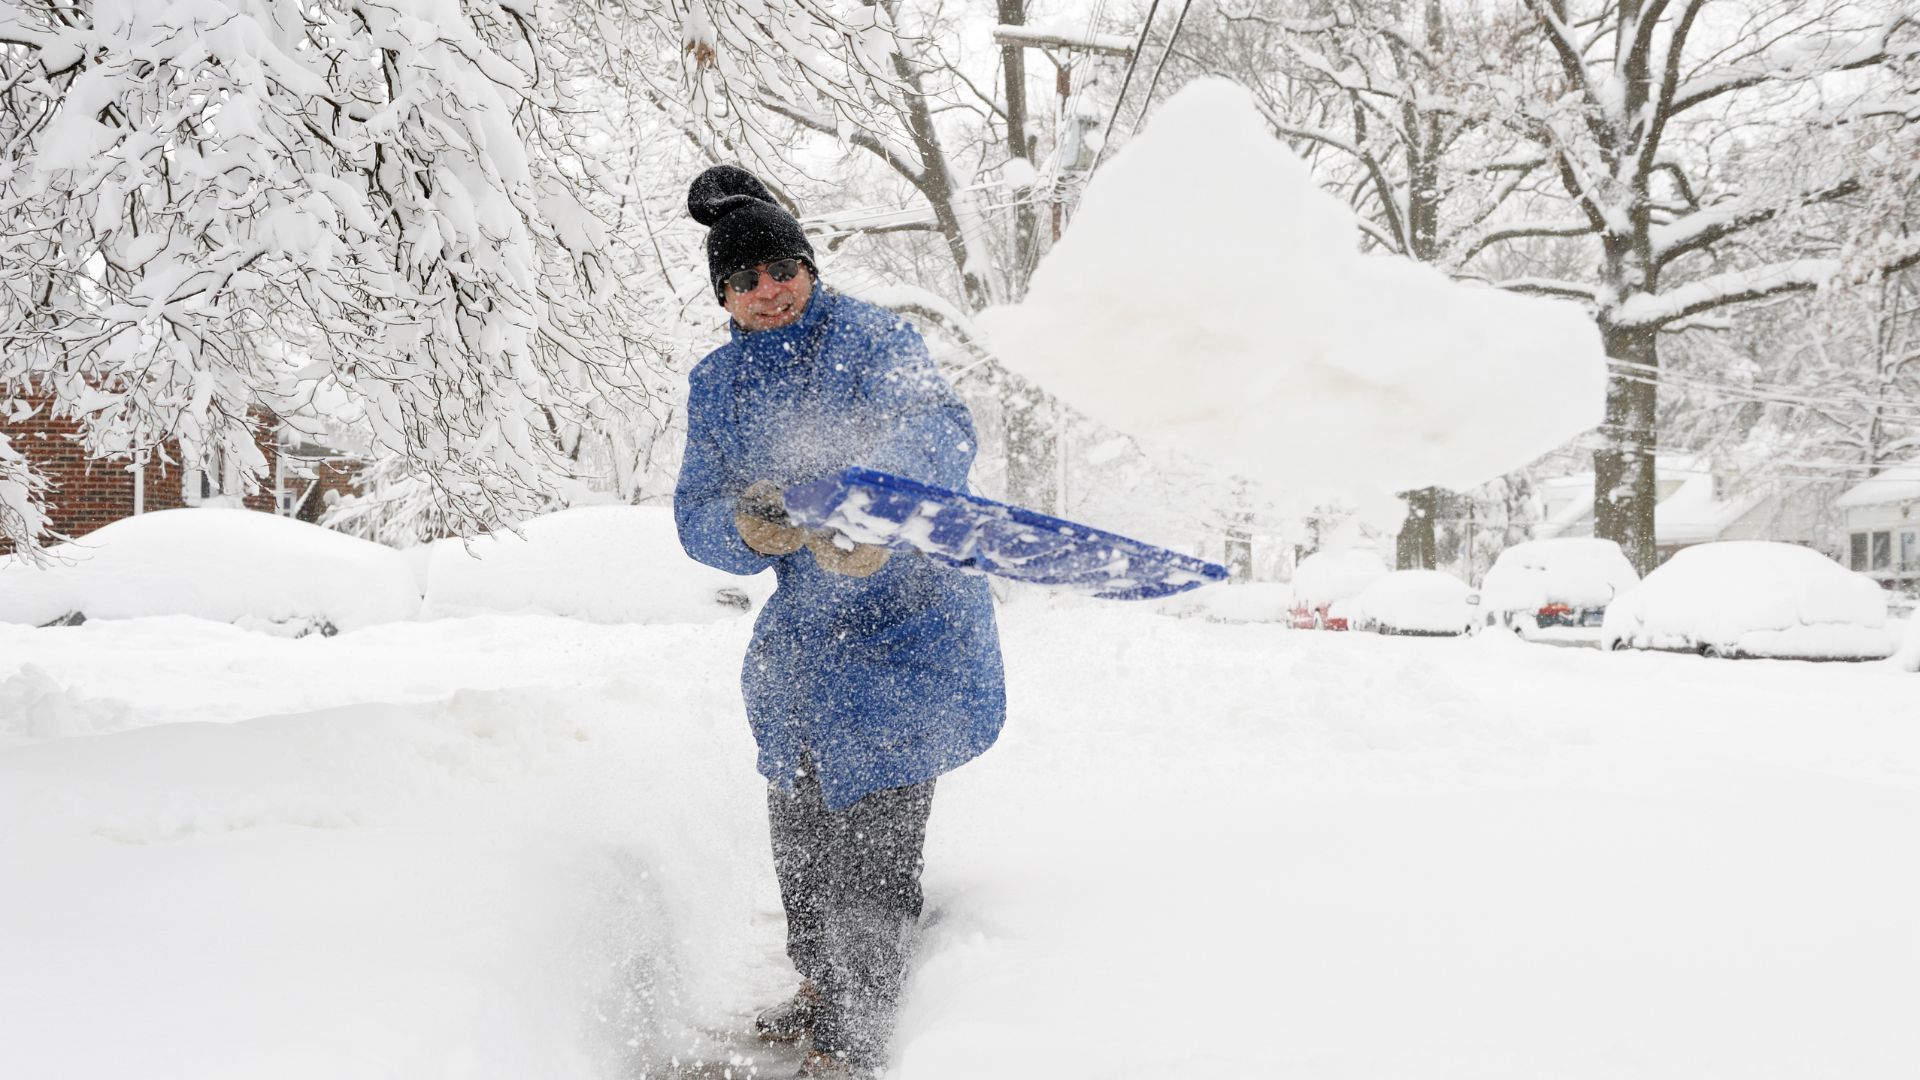 M28457 - Vermont Snow Shoveling Safety Tips Hero Image.jpg